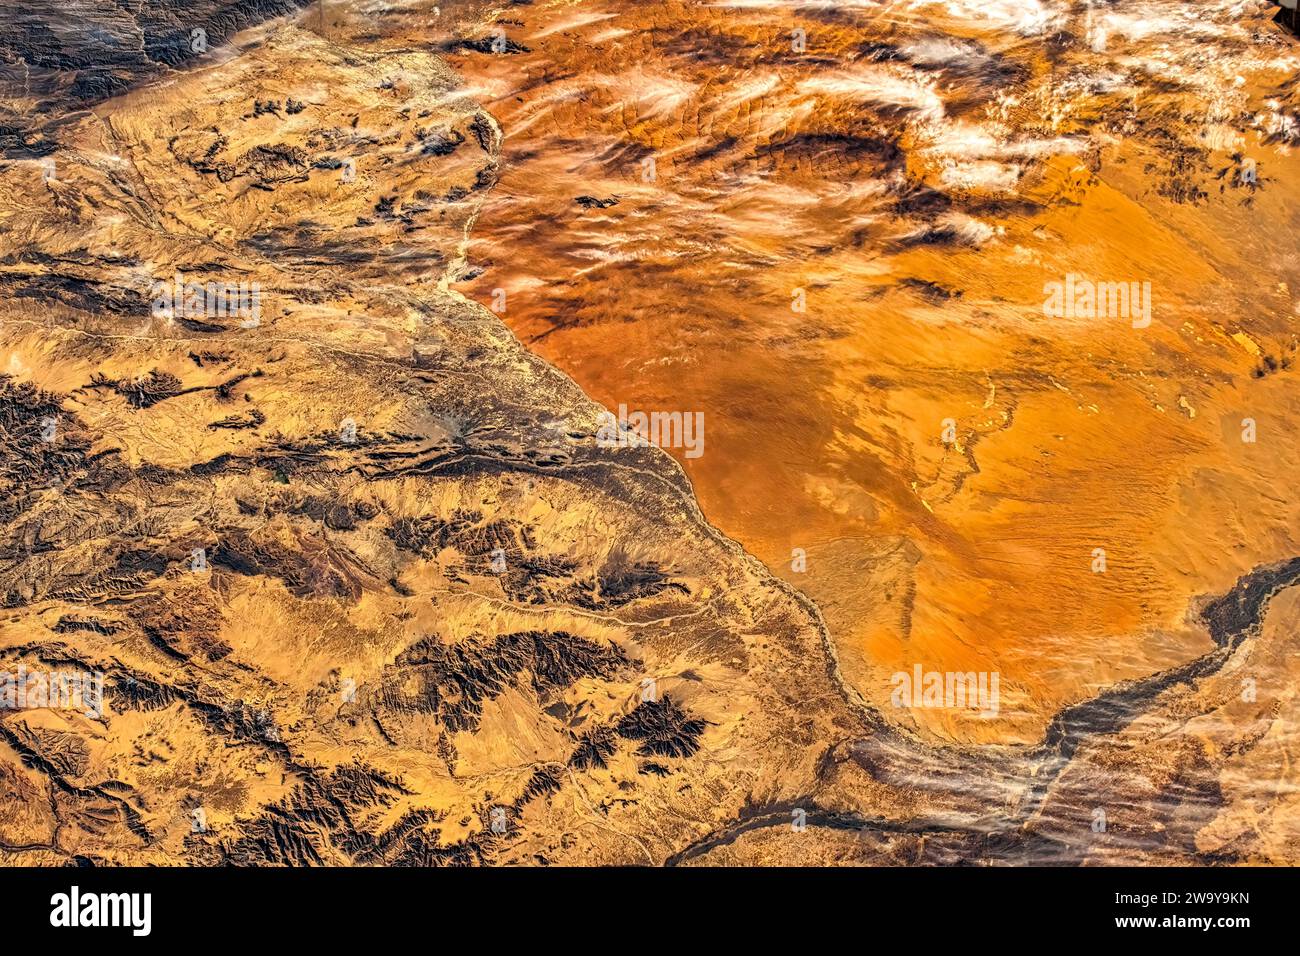 Desert Land Beauty in Afghanistan. Digital enhancement of a NASA image. Stock Photo